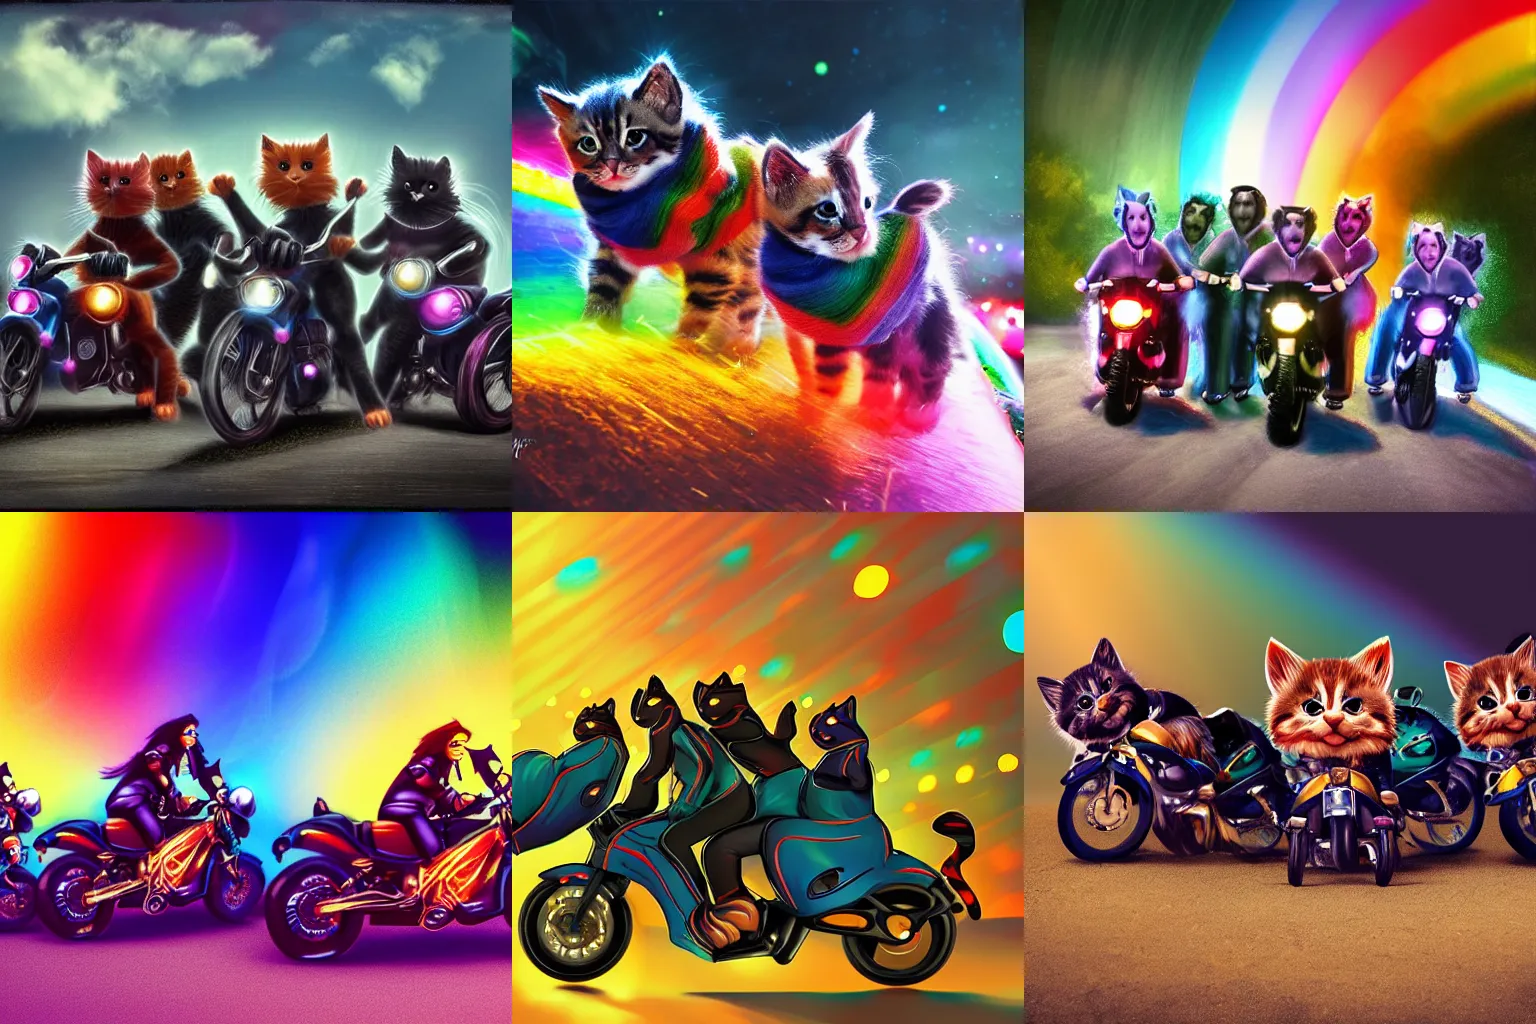 Prompt: wide full body, group of rainbow cute kittens wearing black jackets riding motorcycles, cinematic lighting, digital art 2k